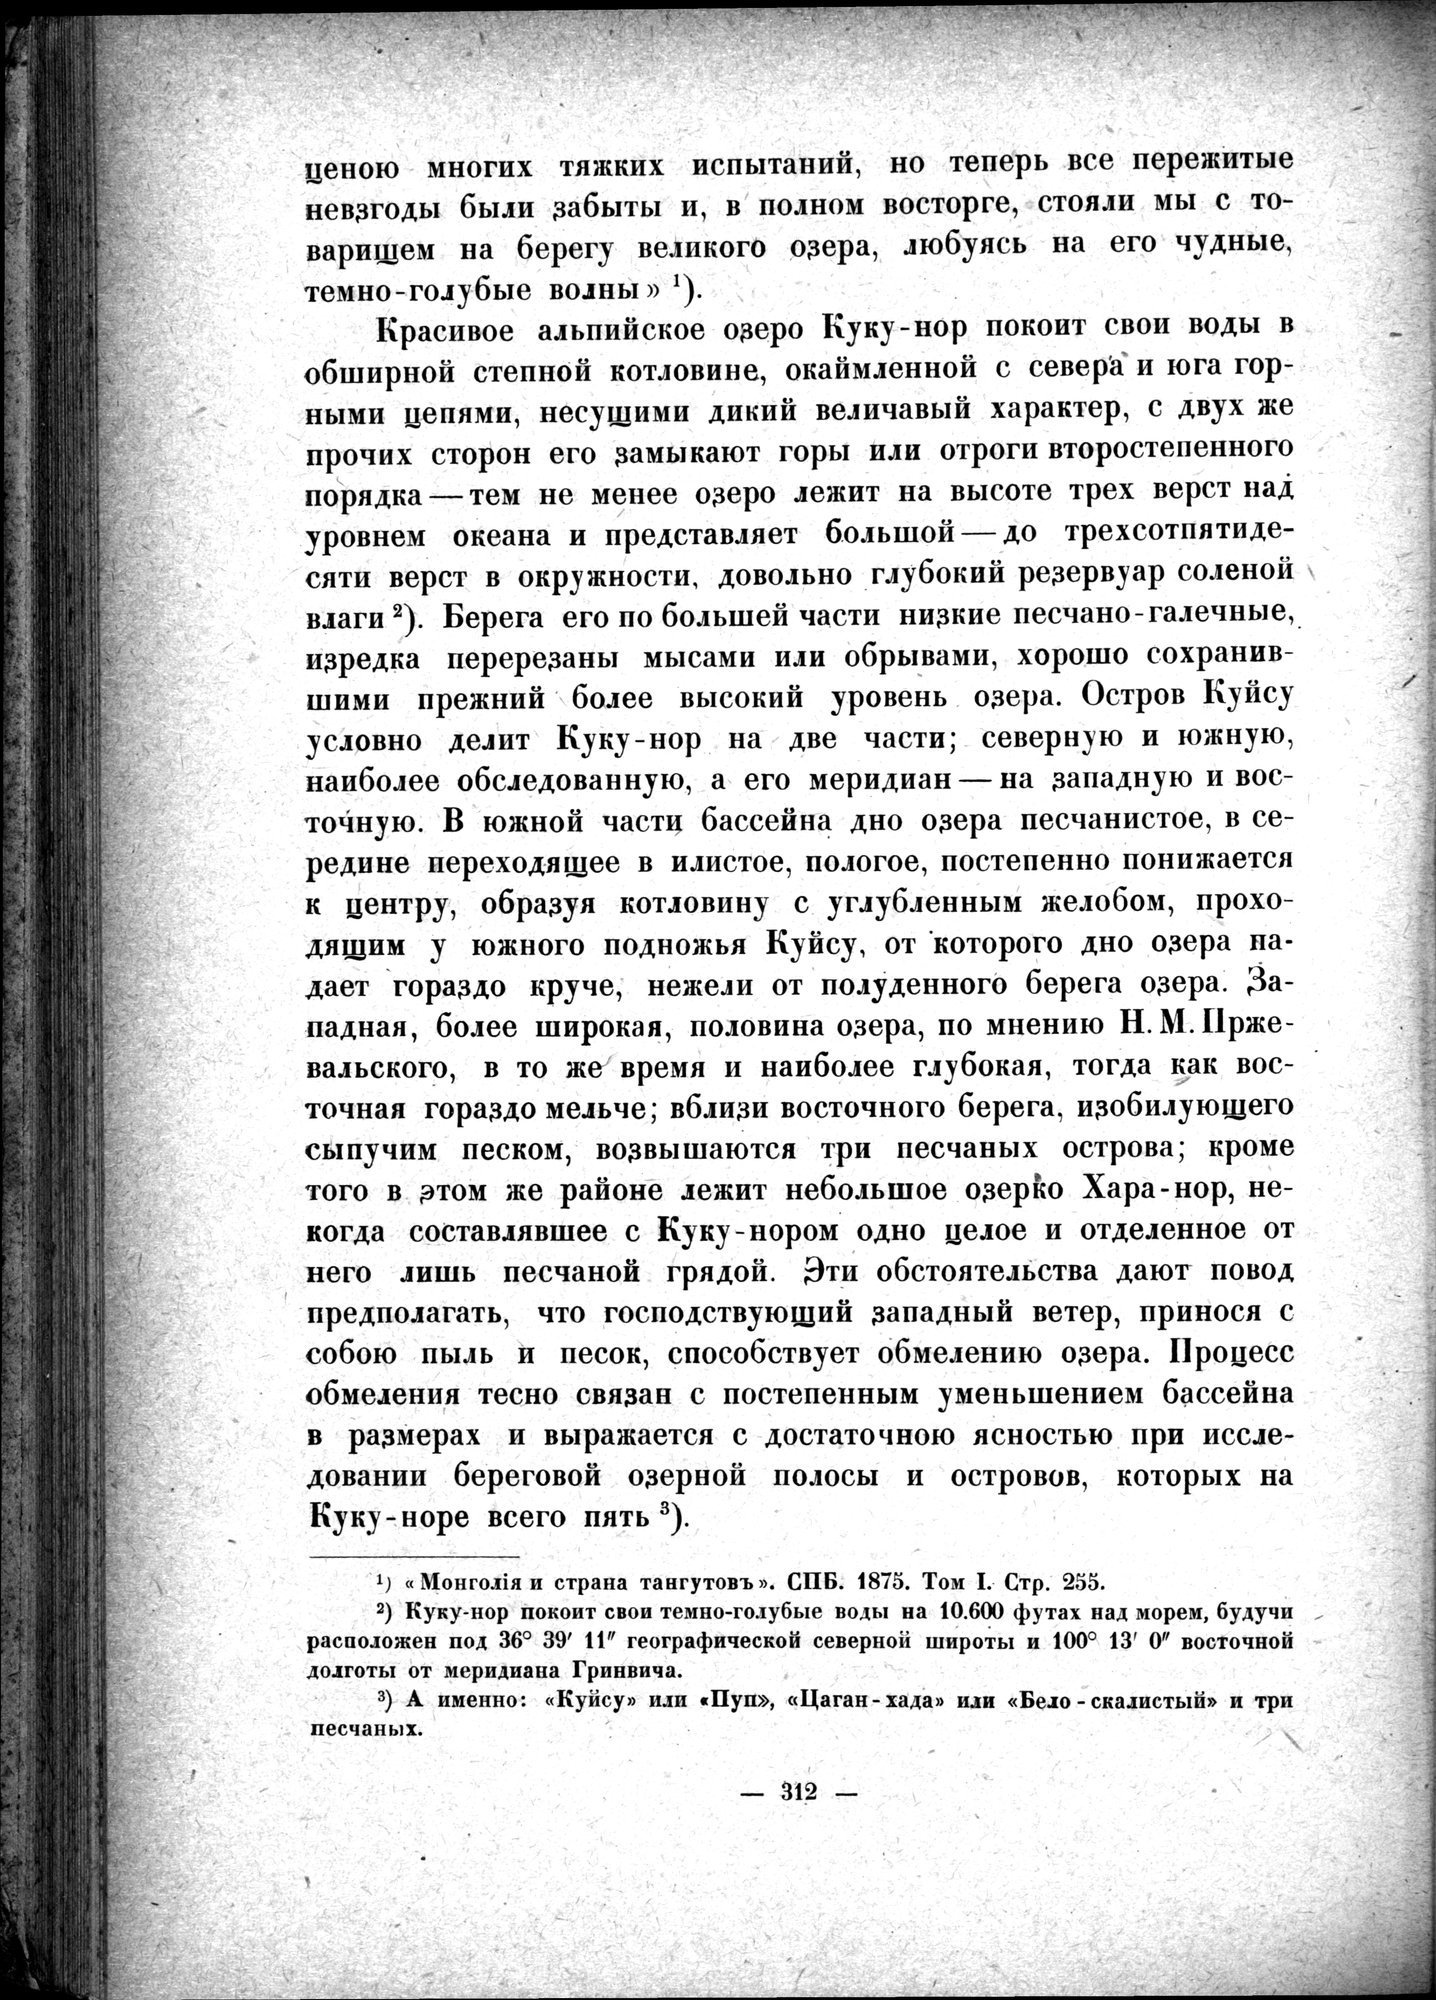 Mongoliya i Amdo i mertby gorod Khara-Khoto : vol.1 / Page 362 (Grayscale High Resolution Image)